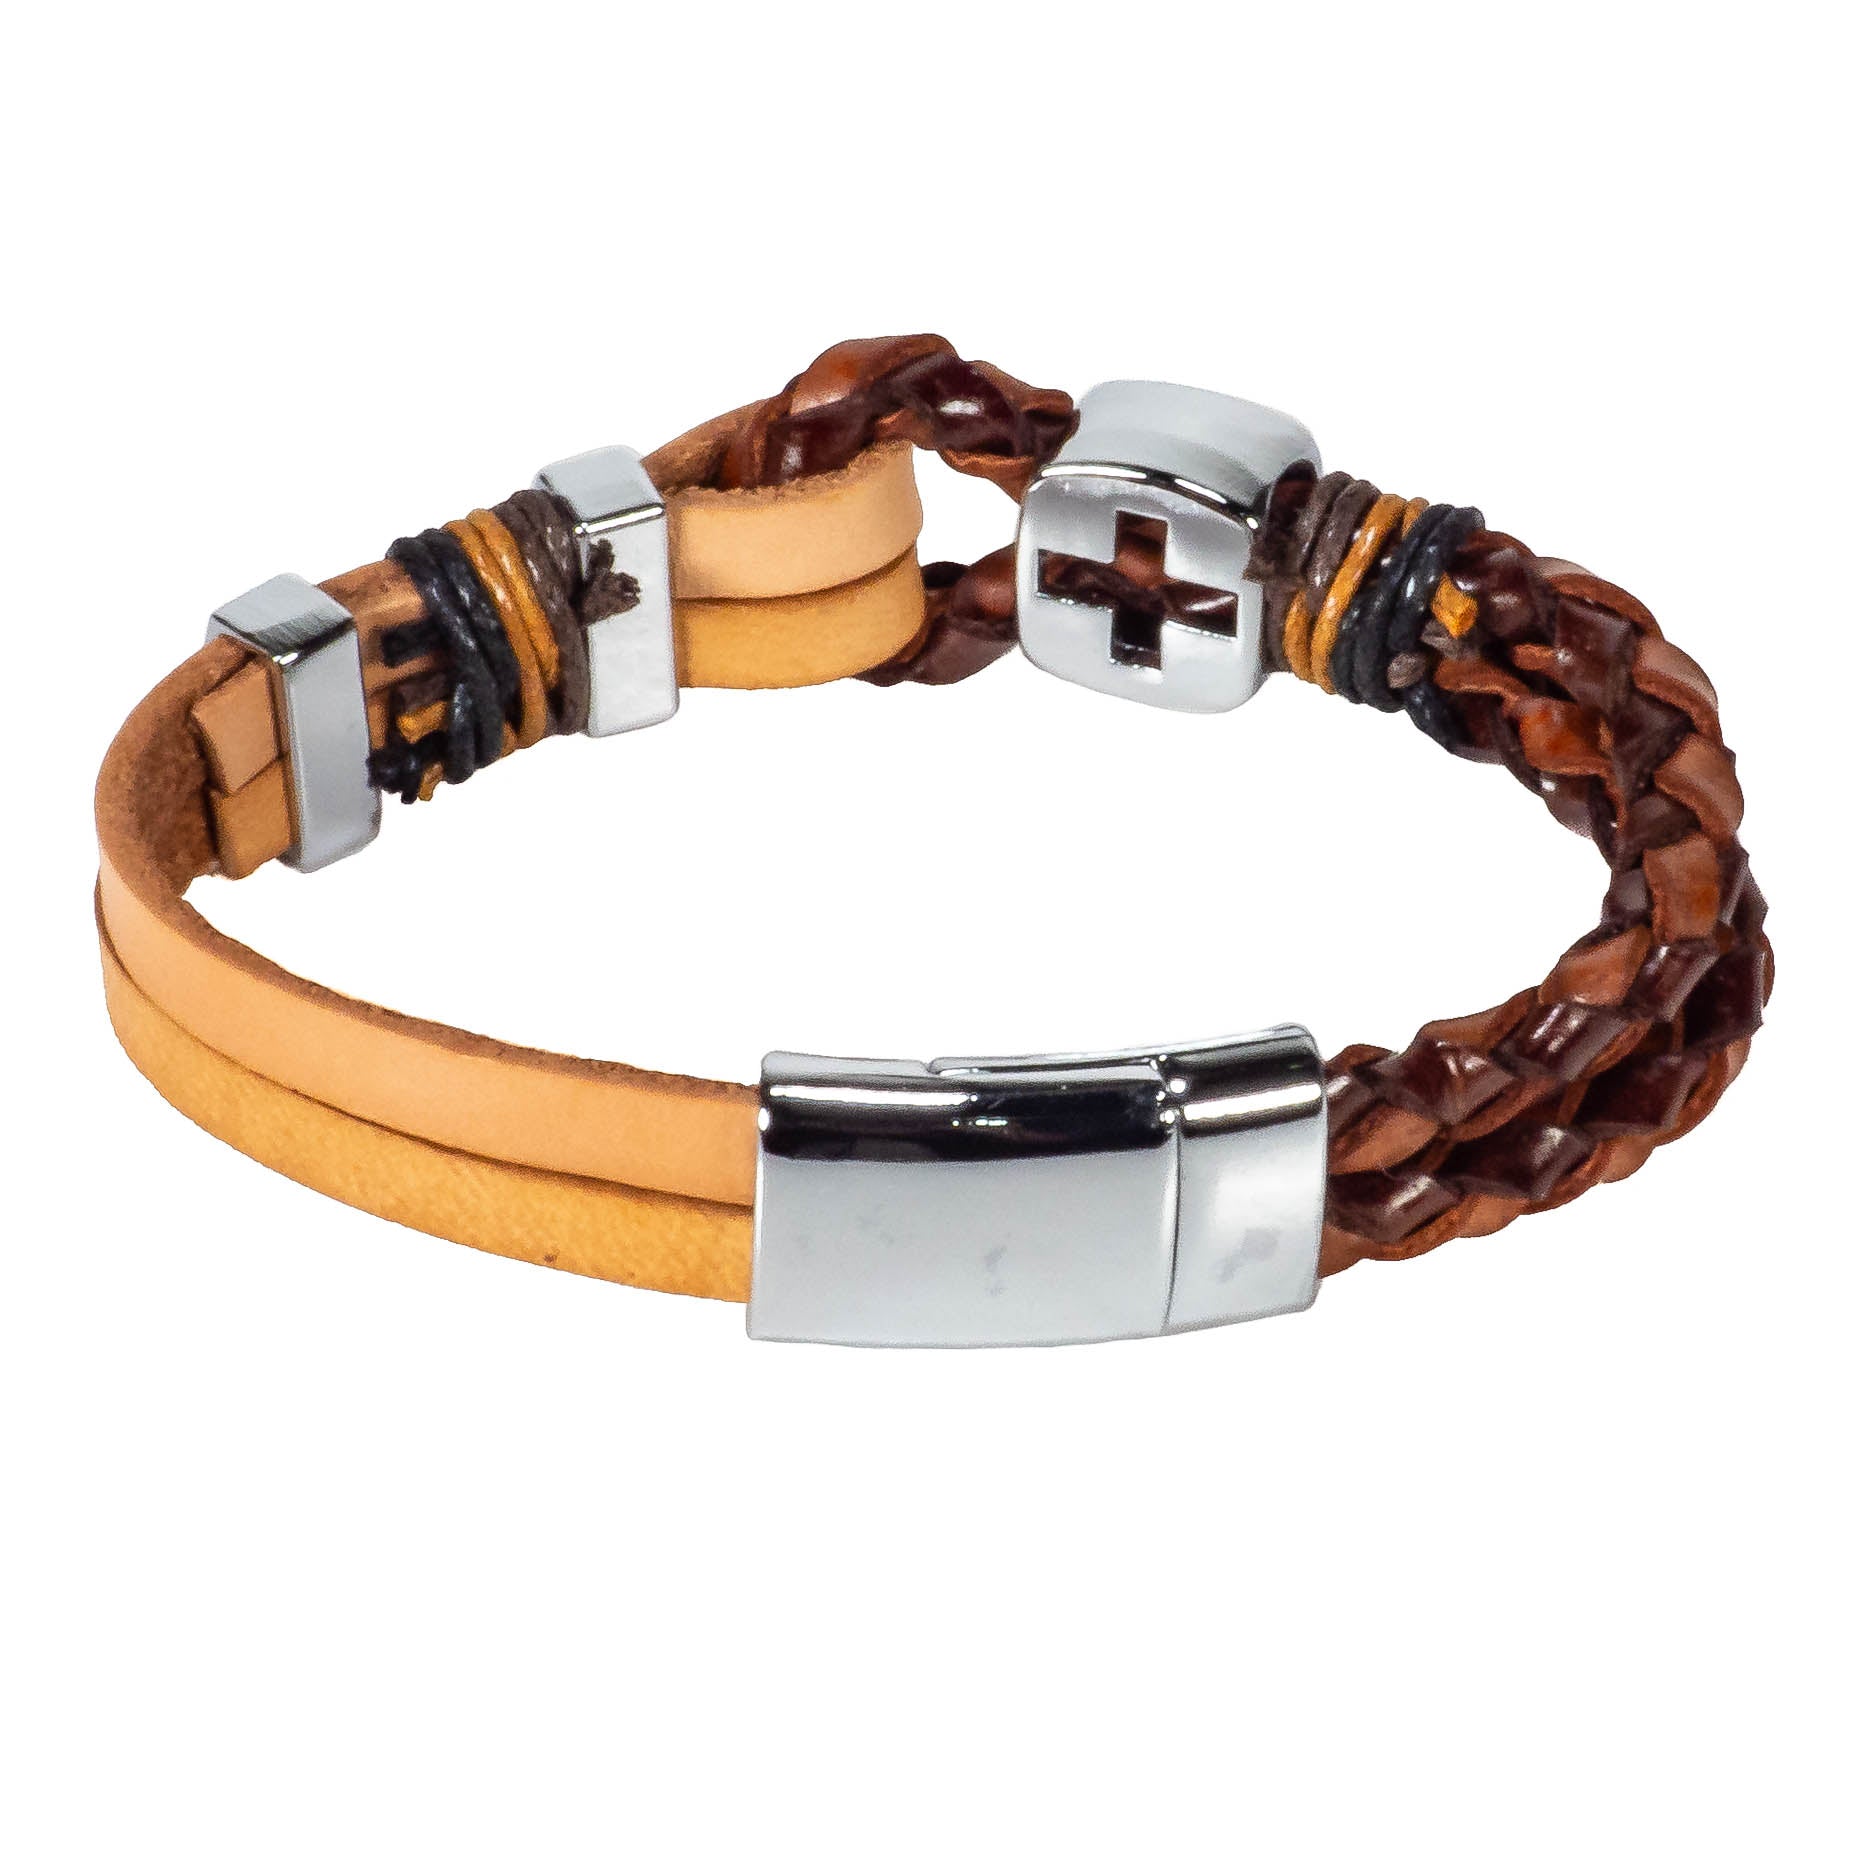 Beige Leather Bracelet with Chrome Cross Design